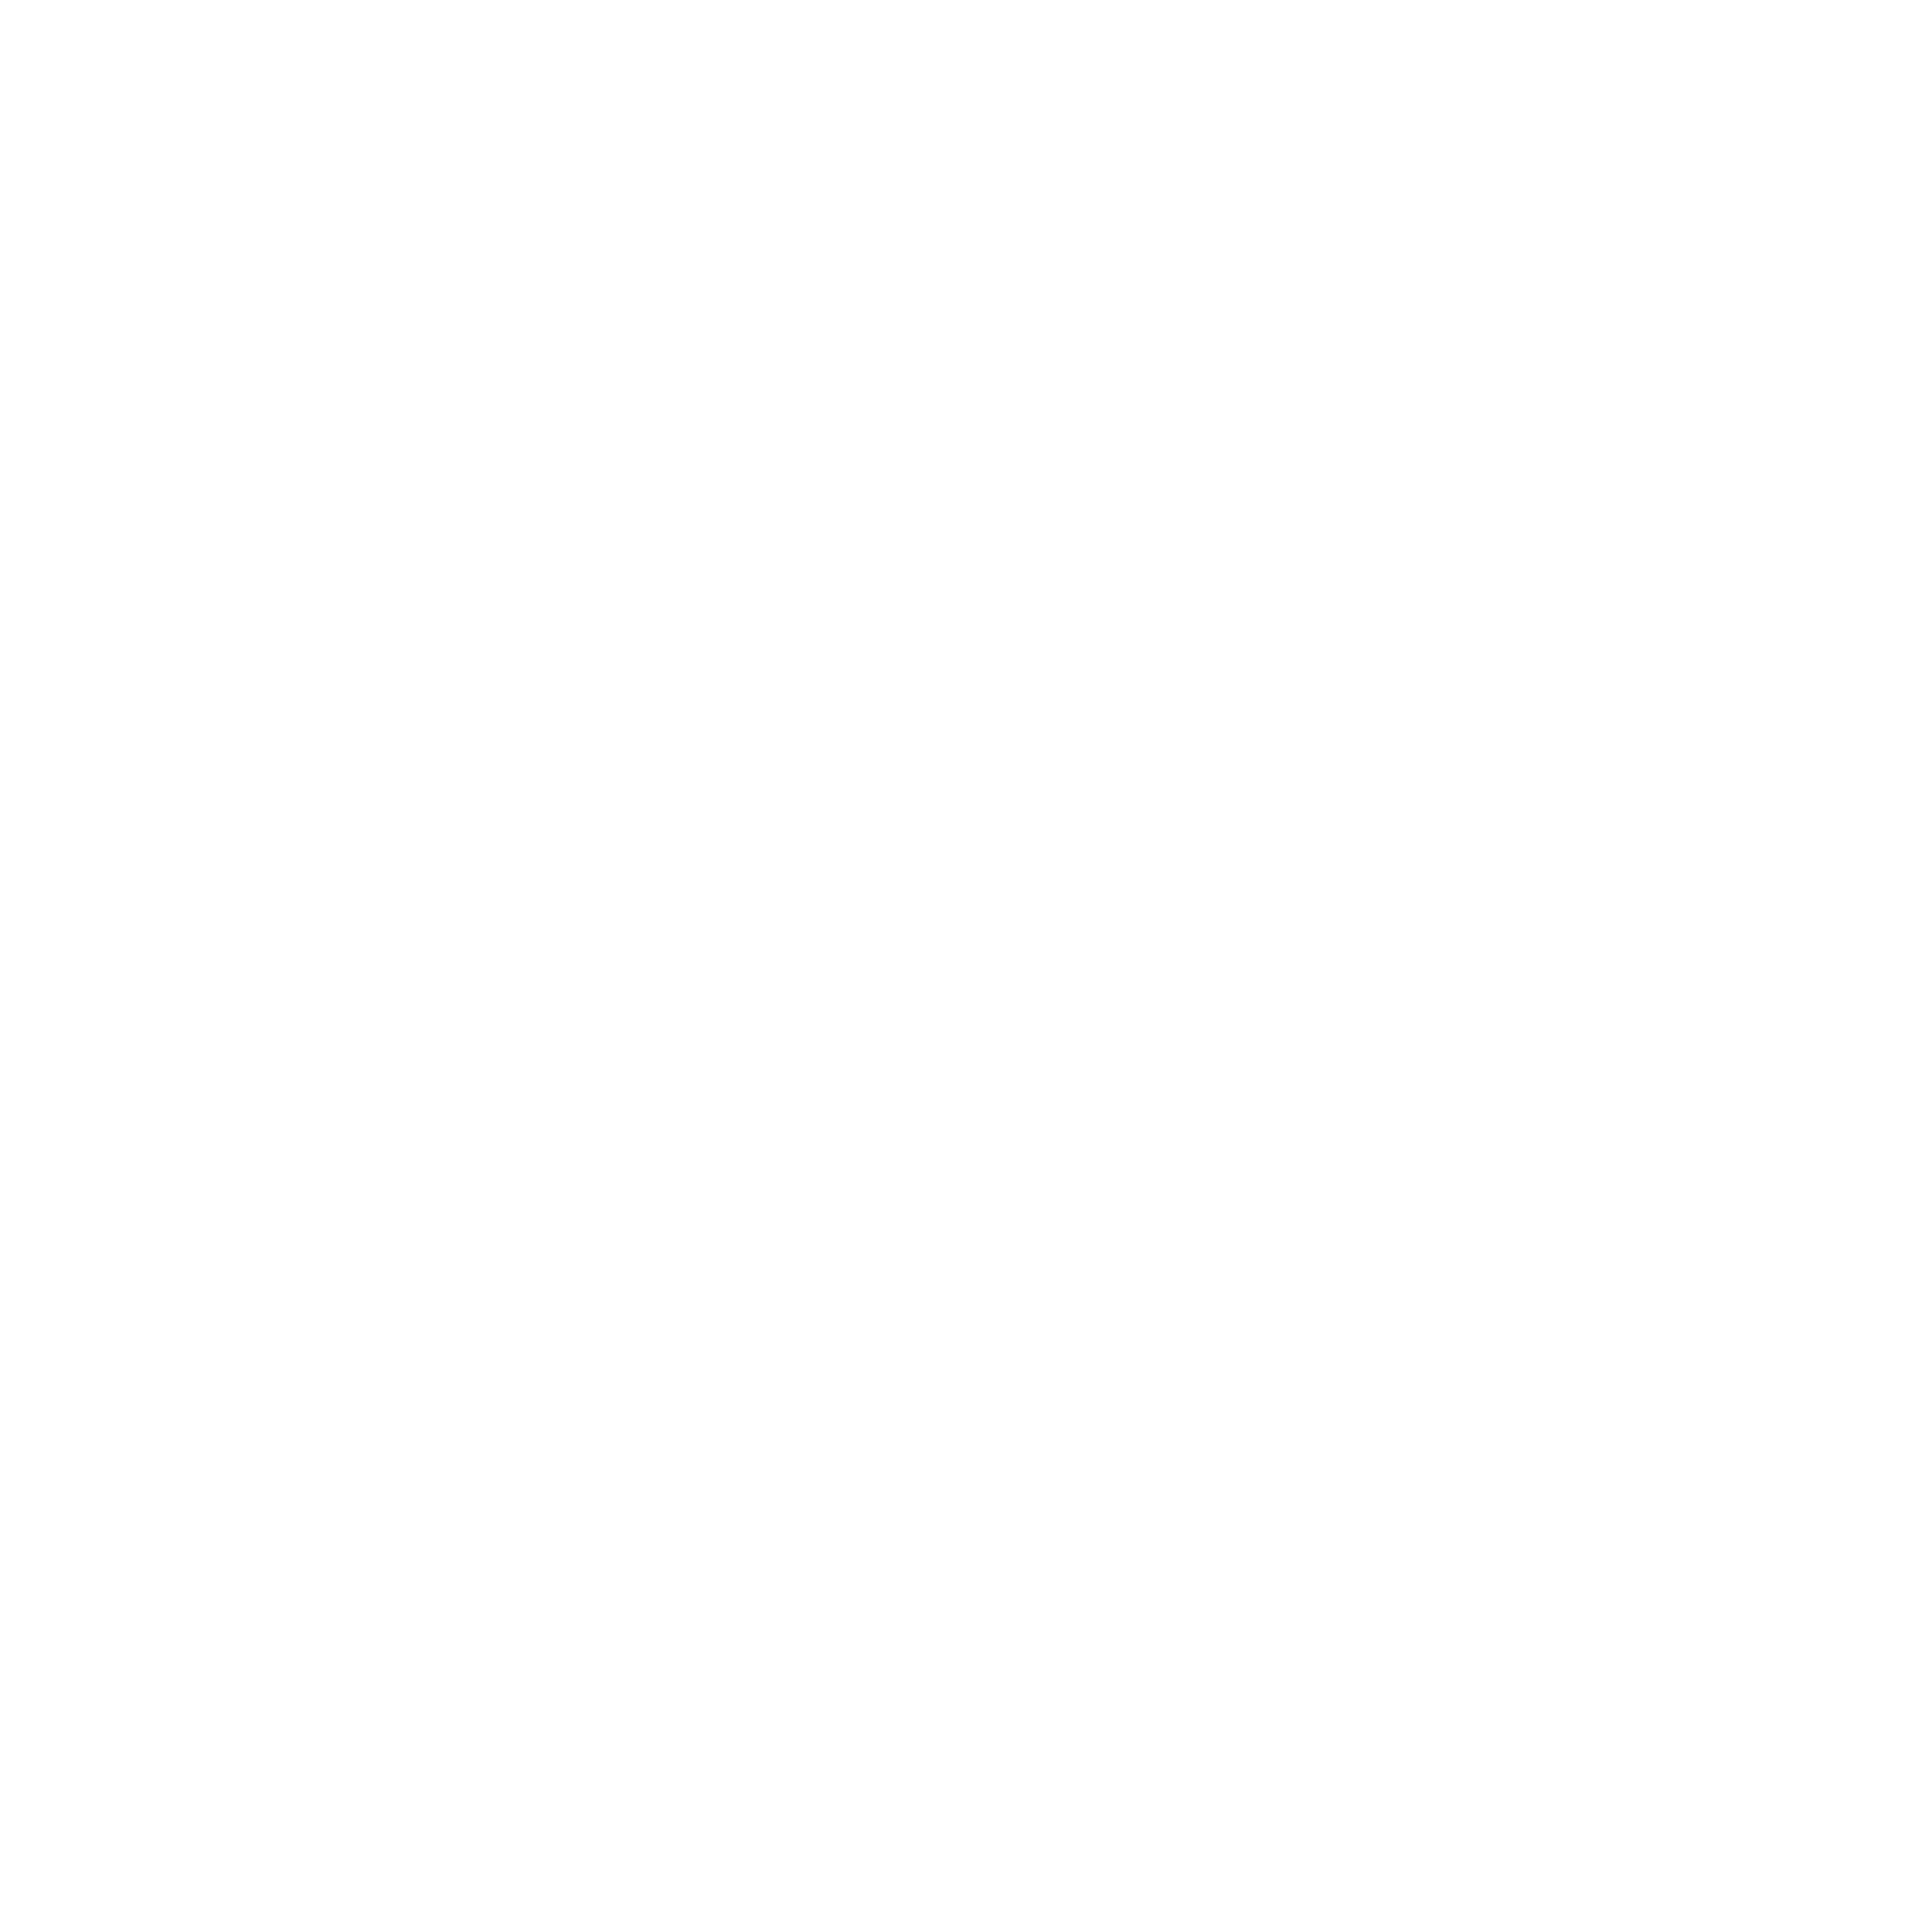 Haute Route Alps logo